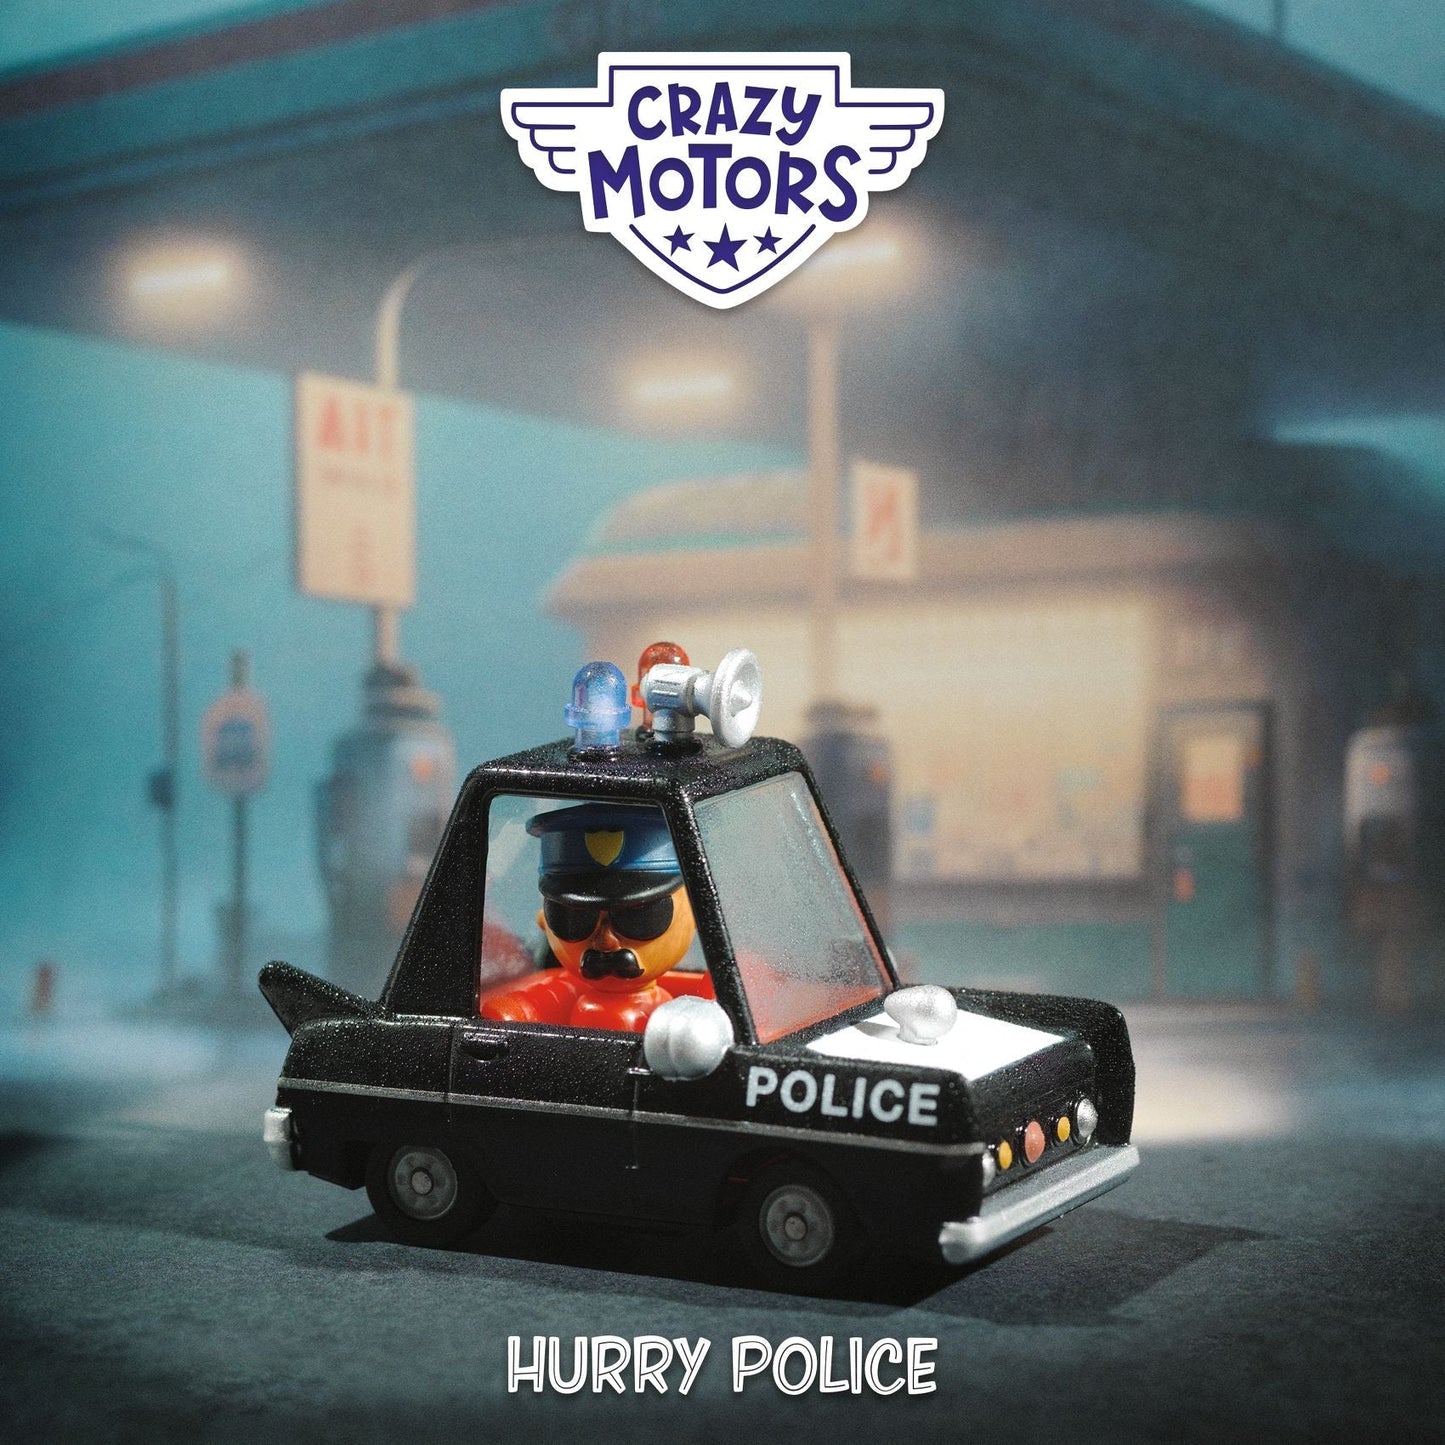 Hurry Police Crazy Motors